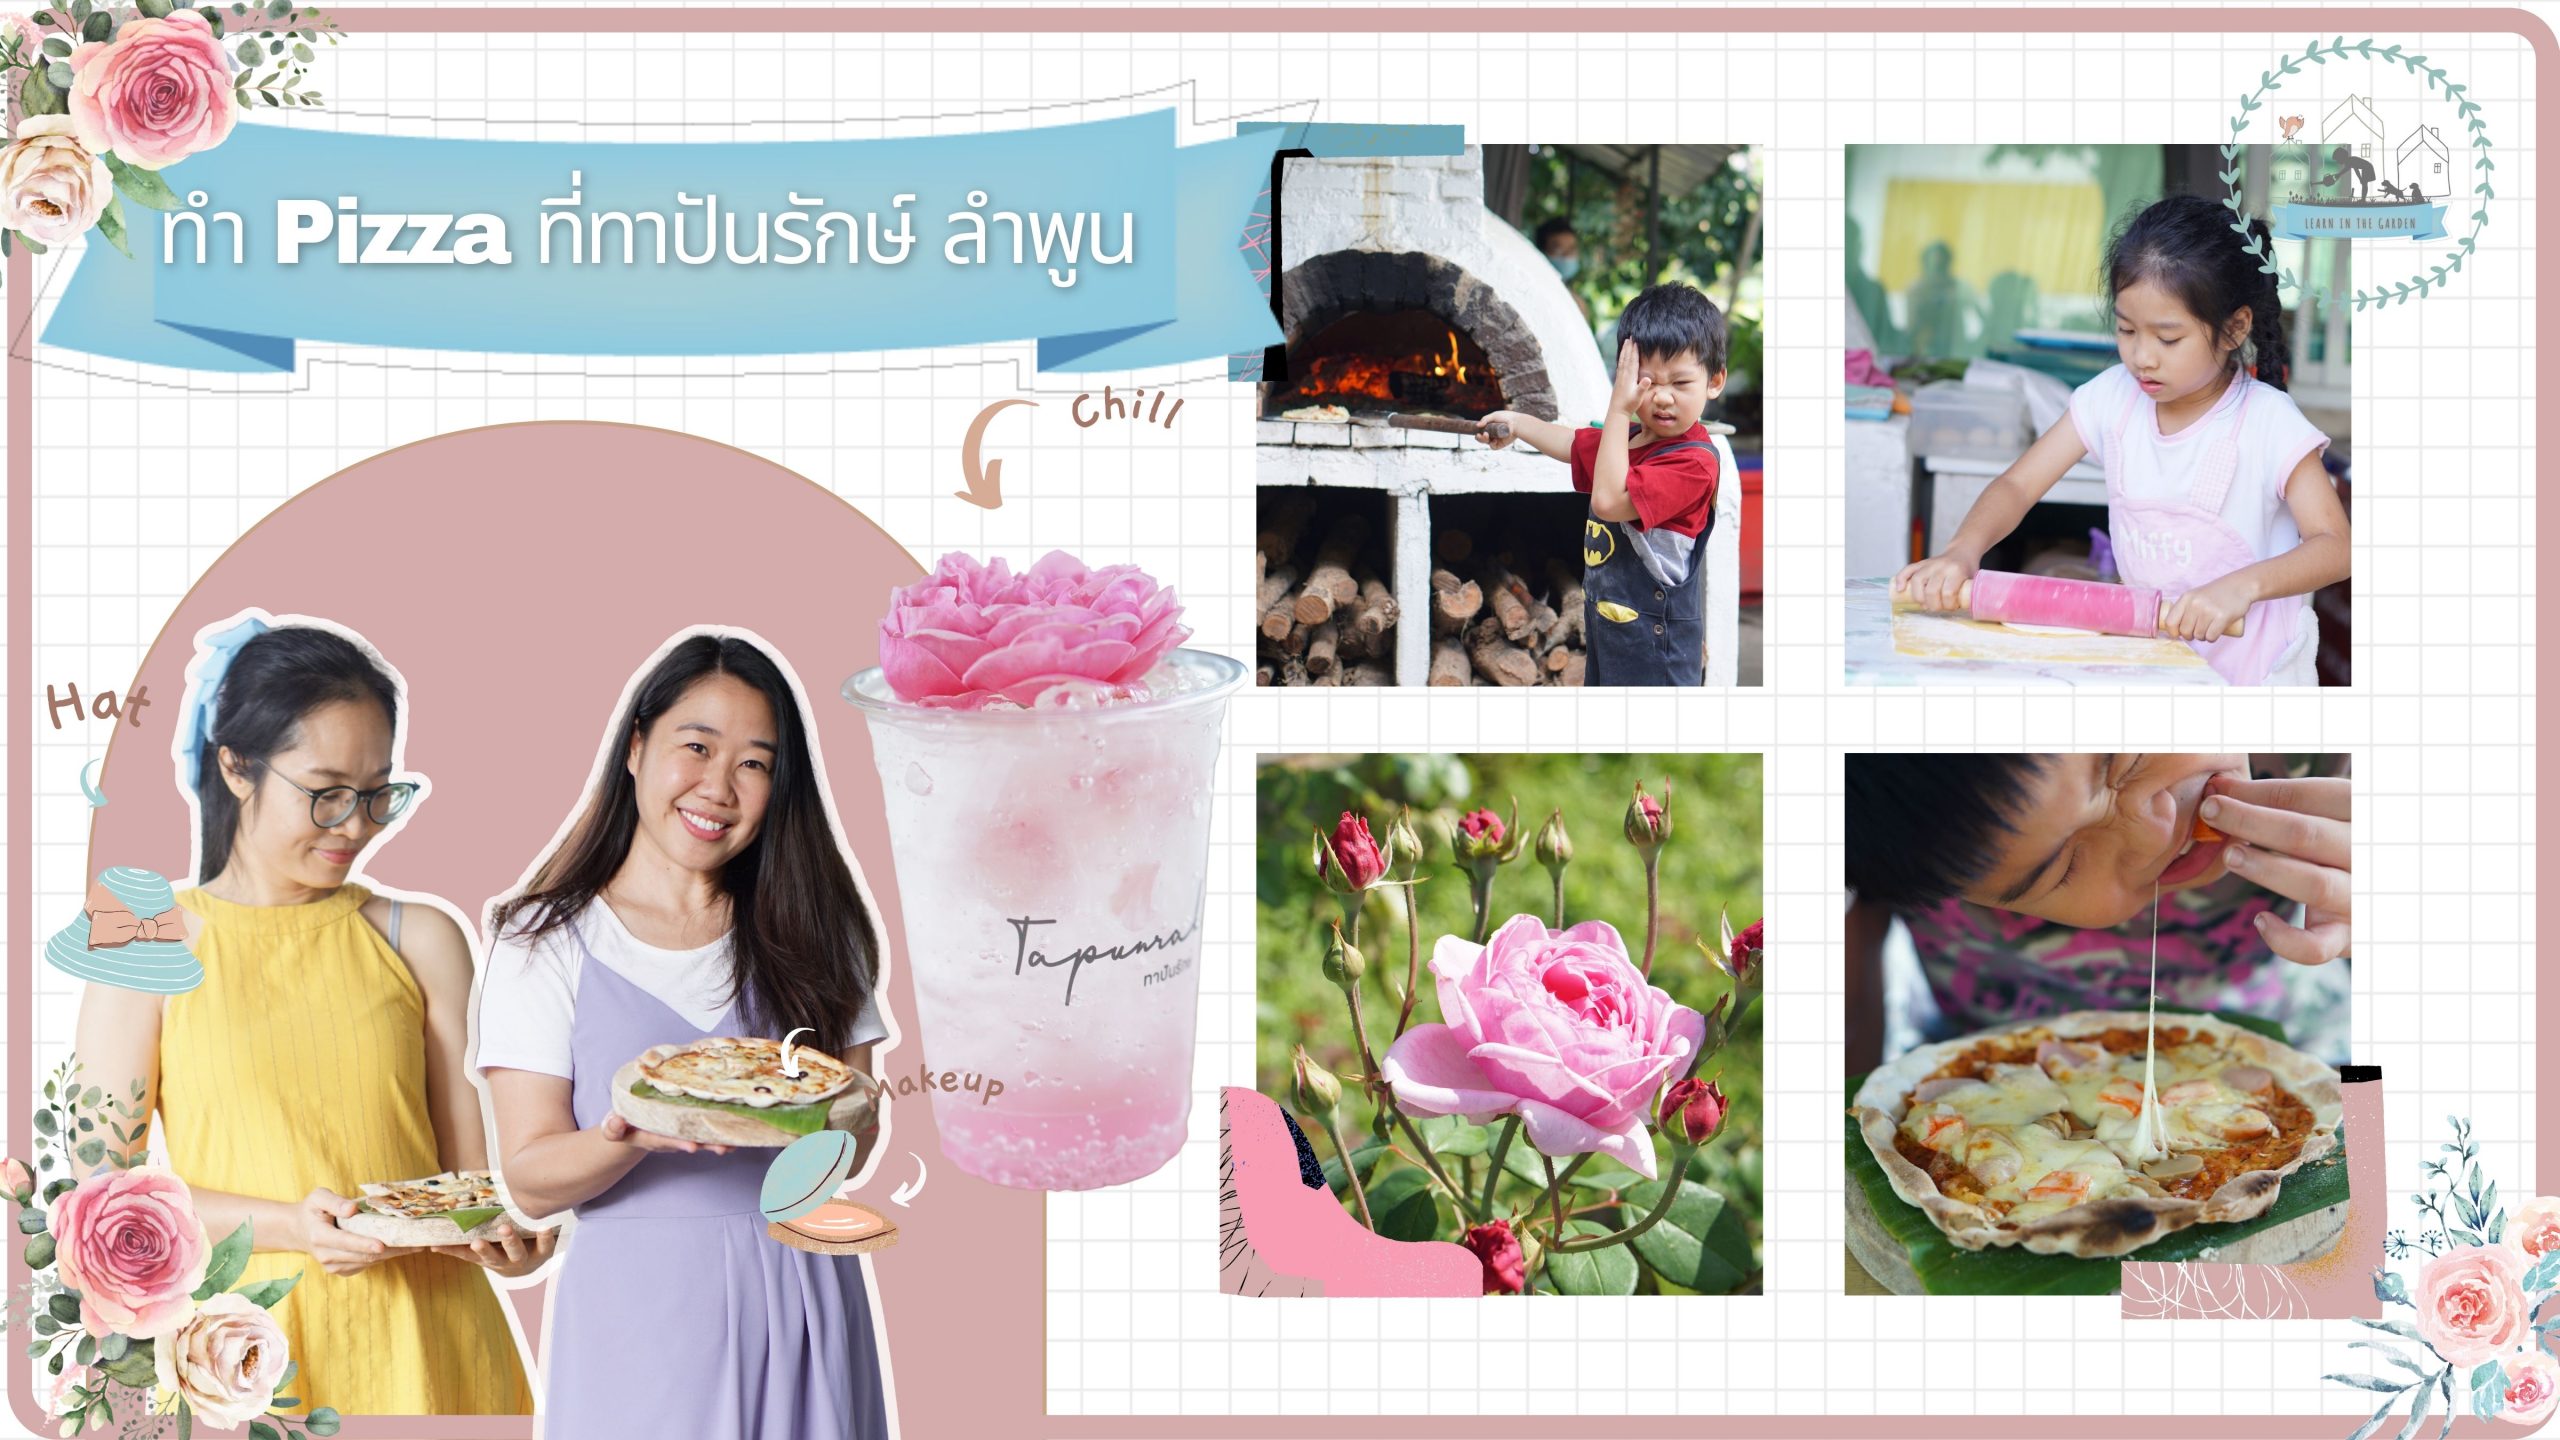 Tapunrak - ทาปันรักษ์ - ลำพูน - ฟาร์มสเตย์ - farmstay - เชียงใหม่ - Chiangmai - พิซซ่า - Pizza -กุหลาบ - Rose - Cafe - คาเฟ่